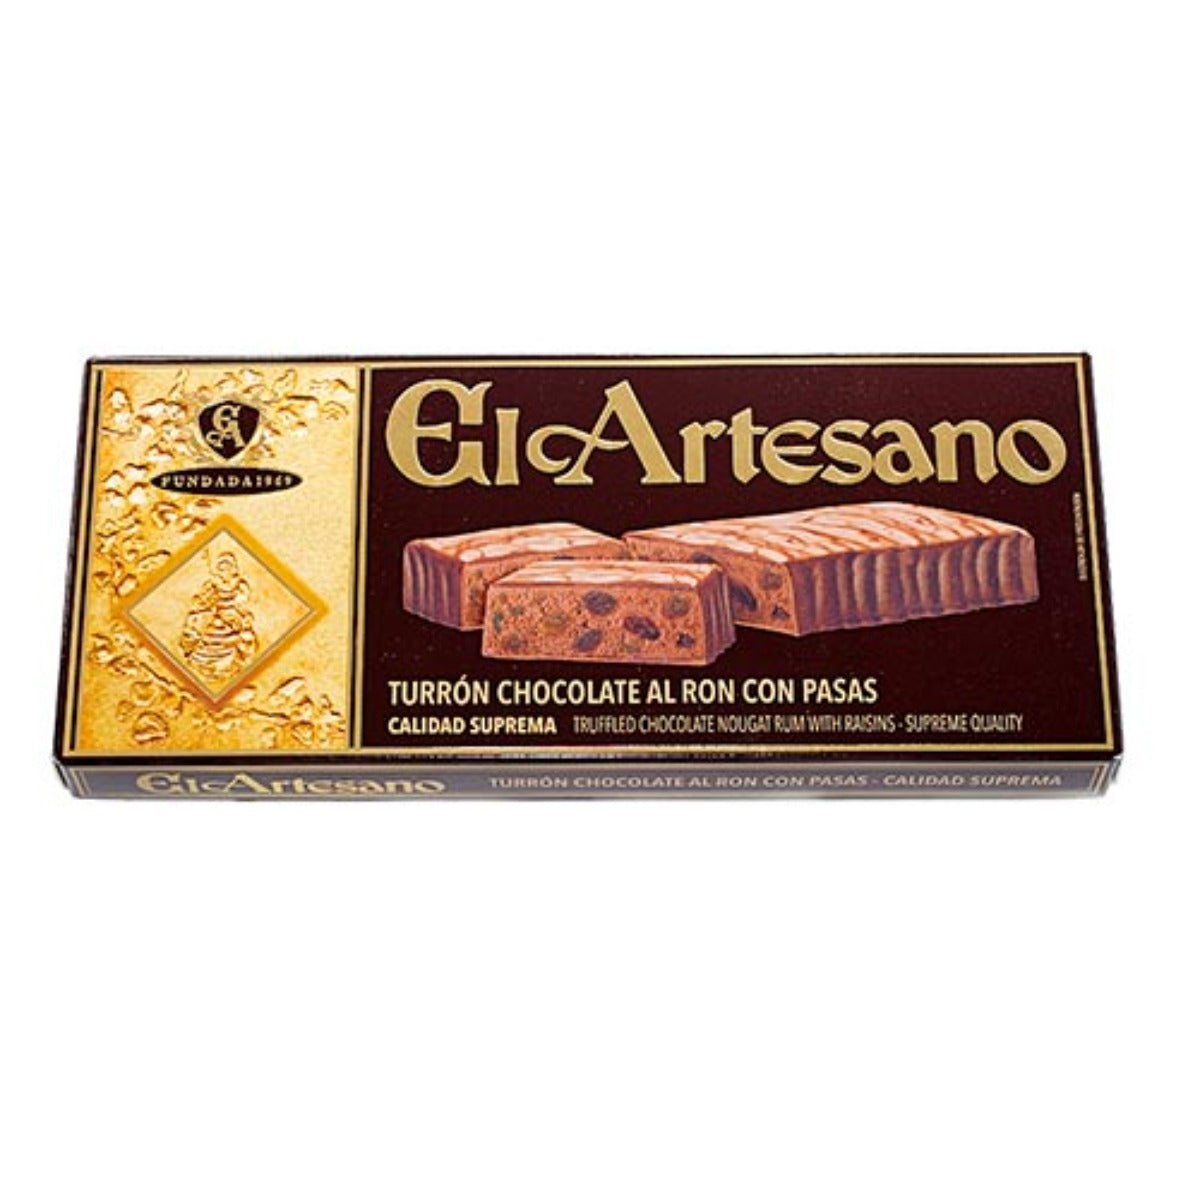 El Artesano Turron Chocolate al Ron con Pasas Spanish Rum and Raisin Chocolate Nougat 200g